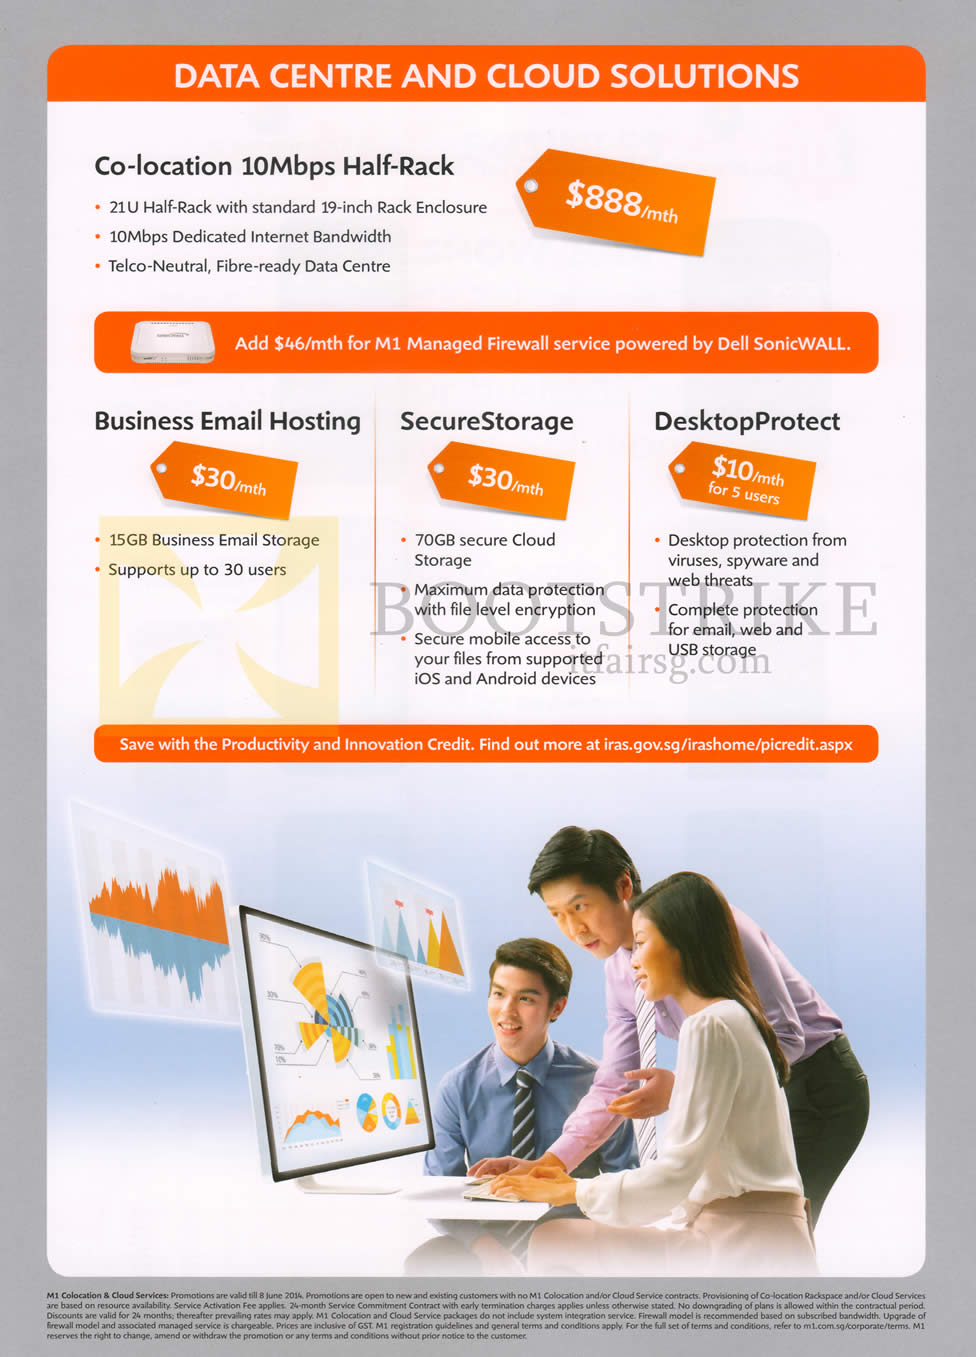 PC SHOW 2014 price list image brochure of M1 Business Co-Location 10Mbps Half-Rack, Business Email Hosting, SecureStorage, DesktopProtect